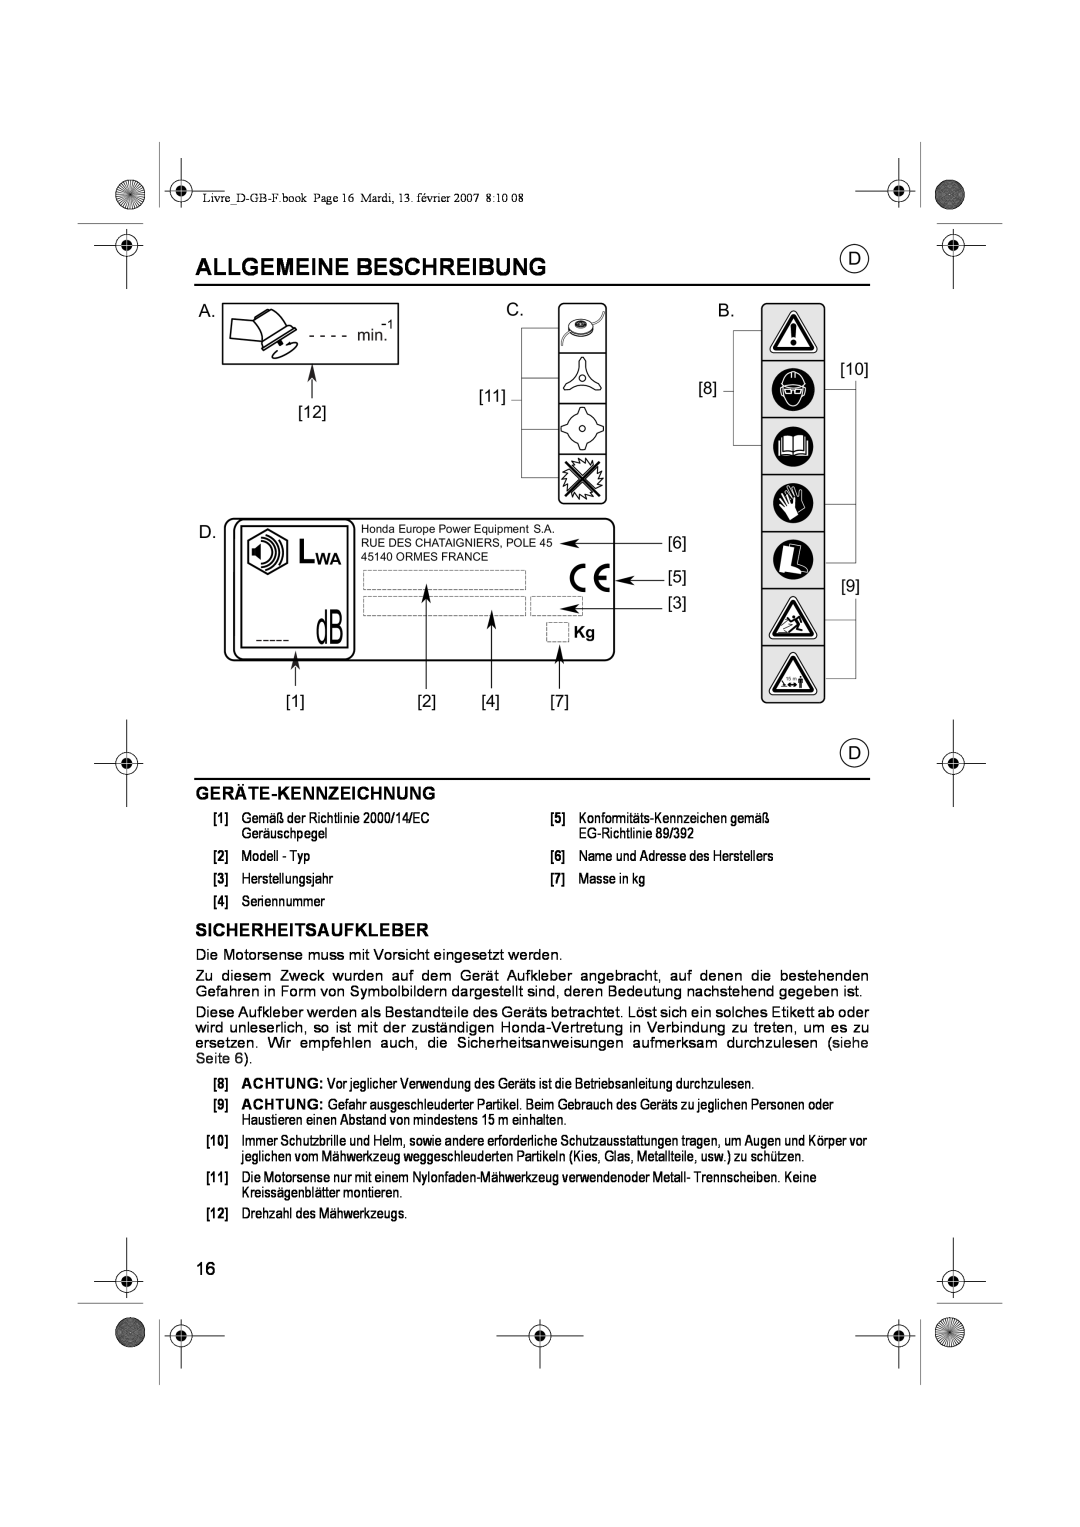 Honda Power Equipment UMK435E owner manual Allgemeine Beschreibung 